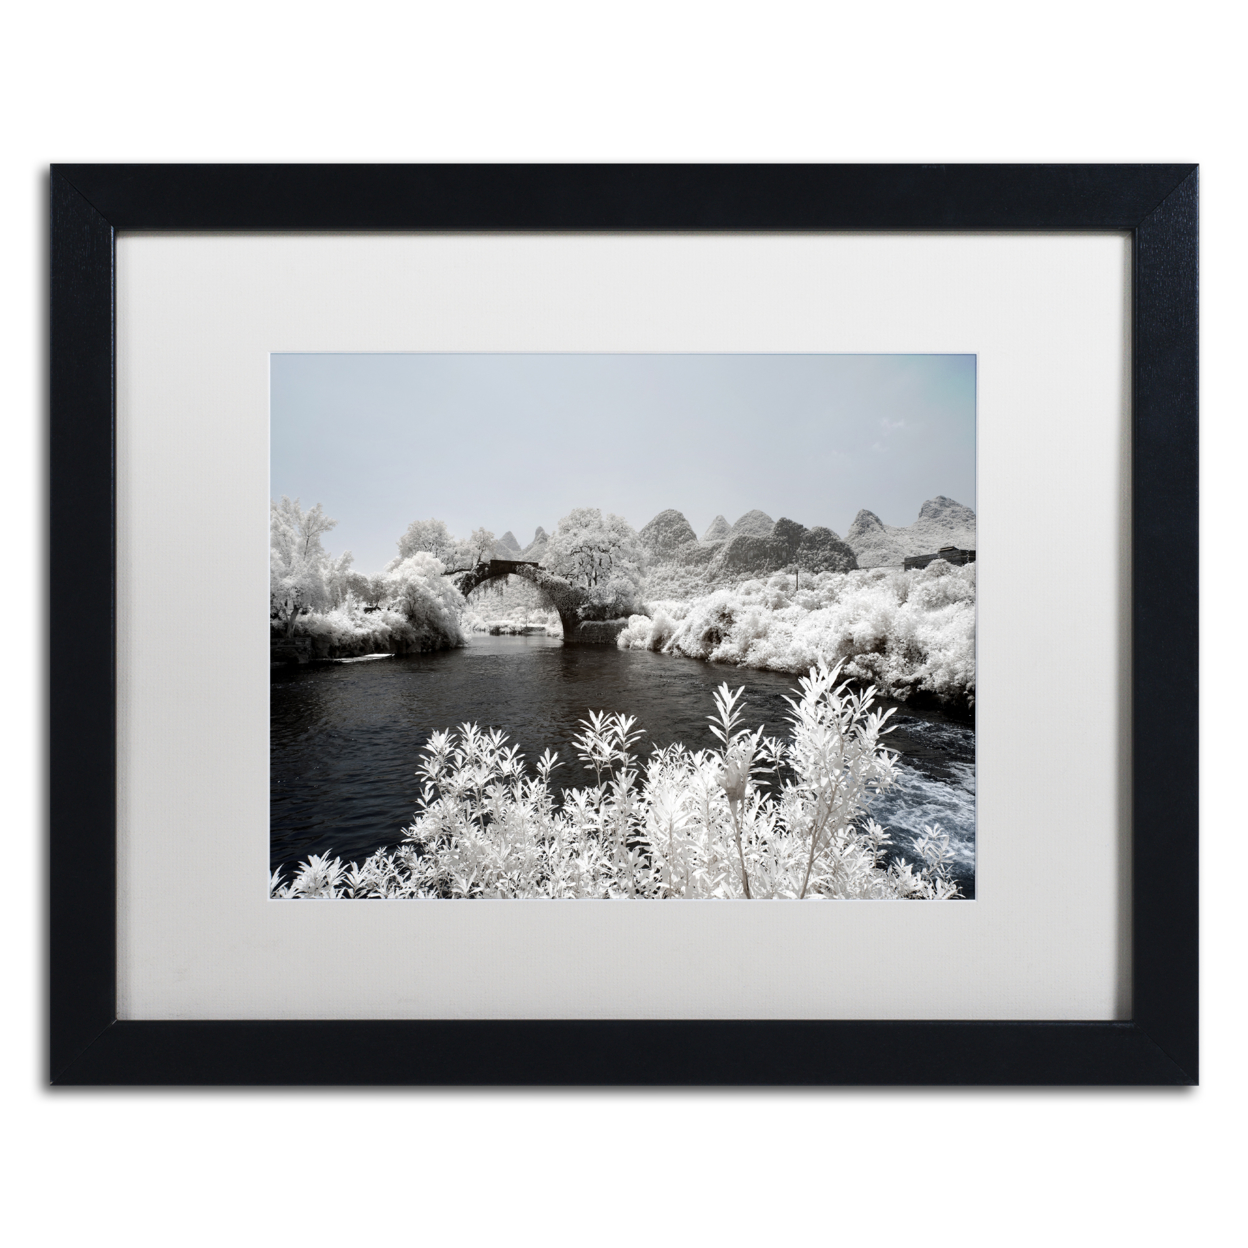 Philippe Hugonnard 'White Bridge' Black Wooden Framed Art 18 X 22 Inches